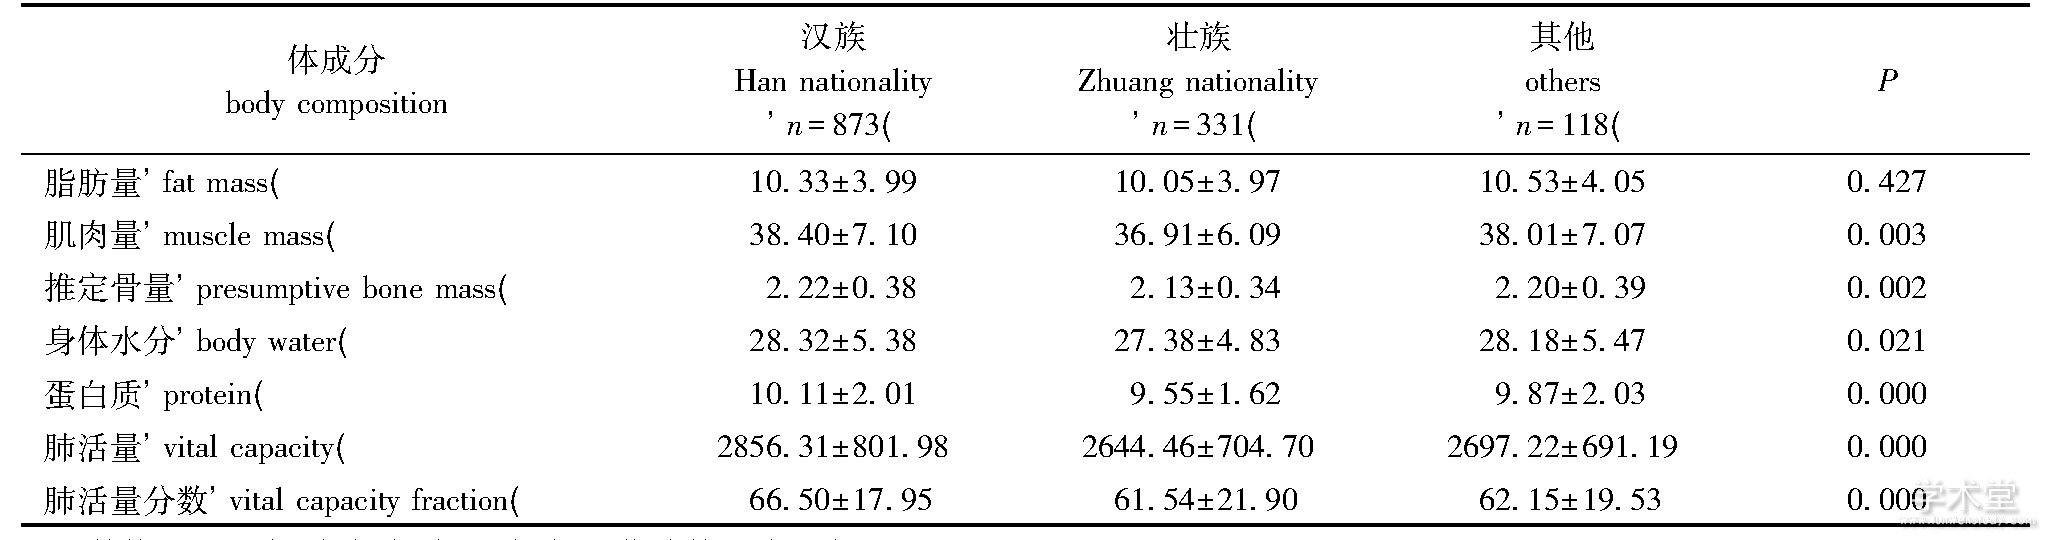 1 ѧɷּλTable 1 Body composition and vital capacity of Guangxi multi ethnicity university students